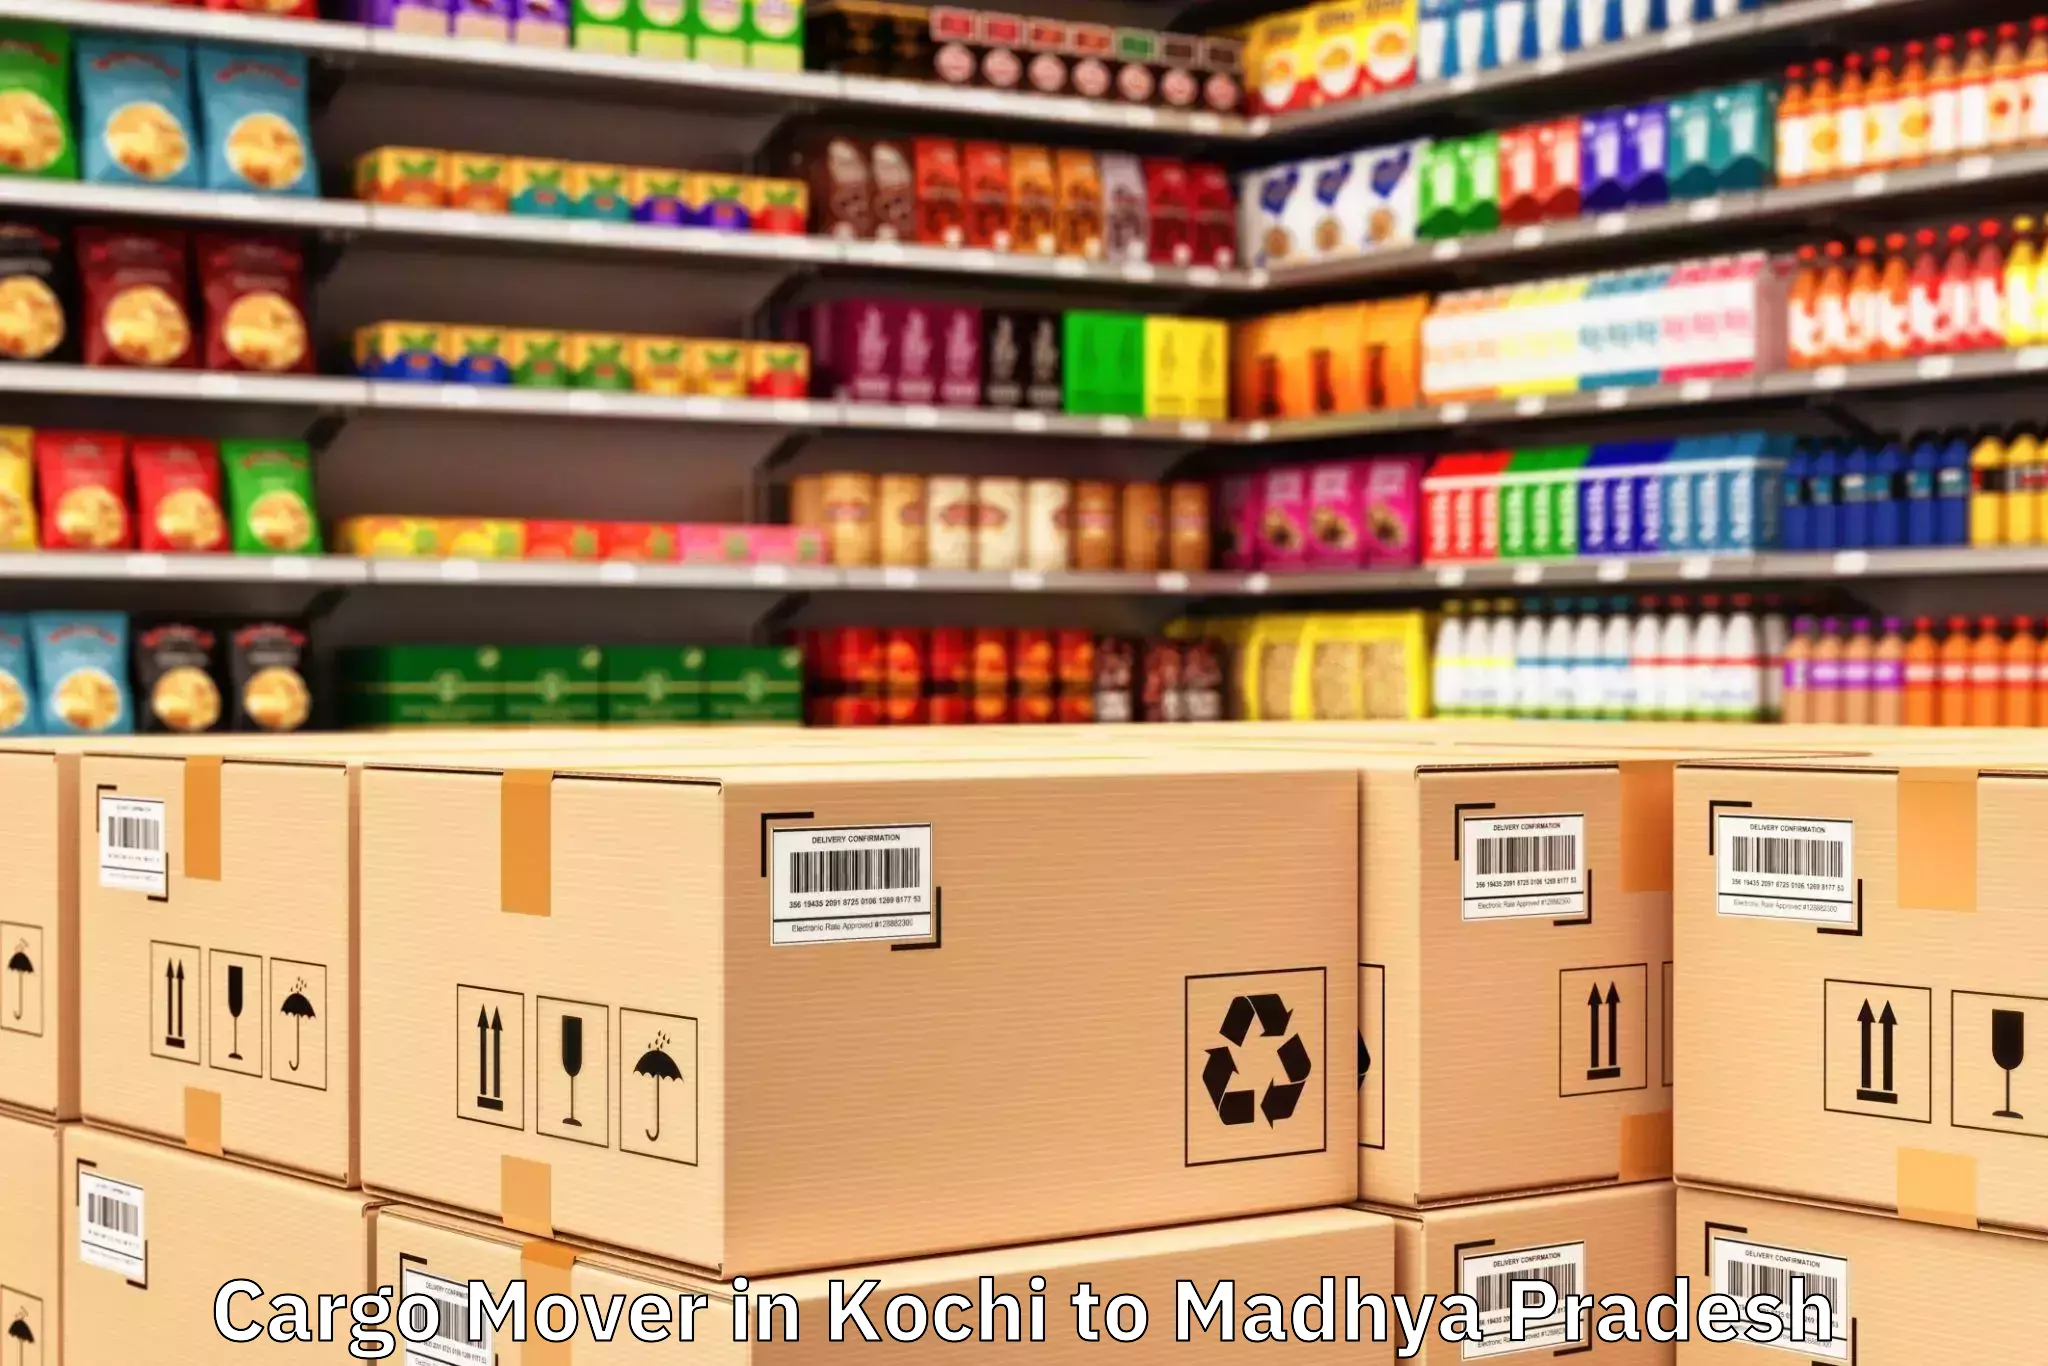 Easy Kochi to Madhya Pradesh Cargo Mover Booking